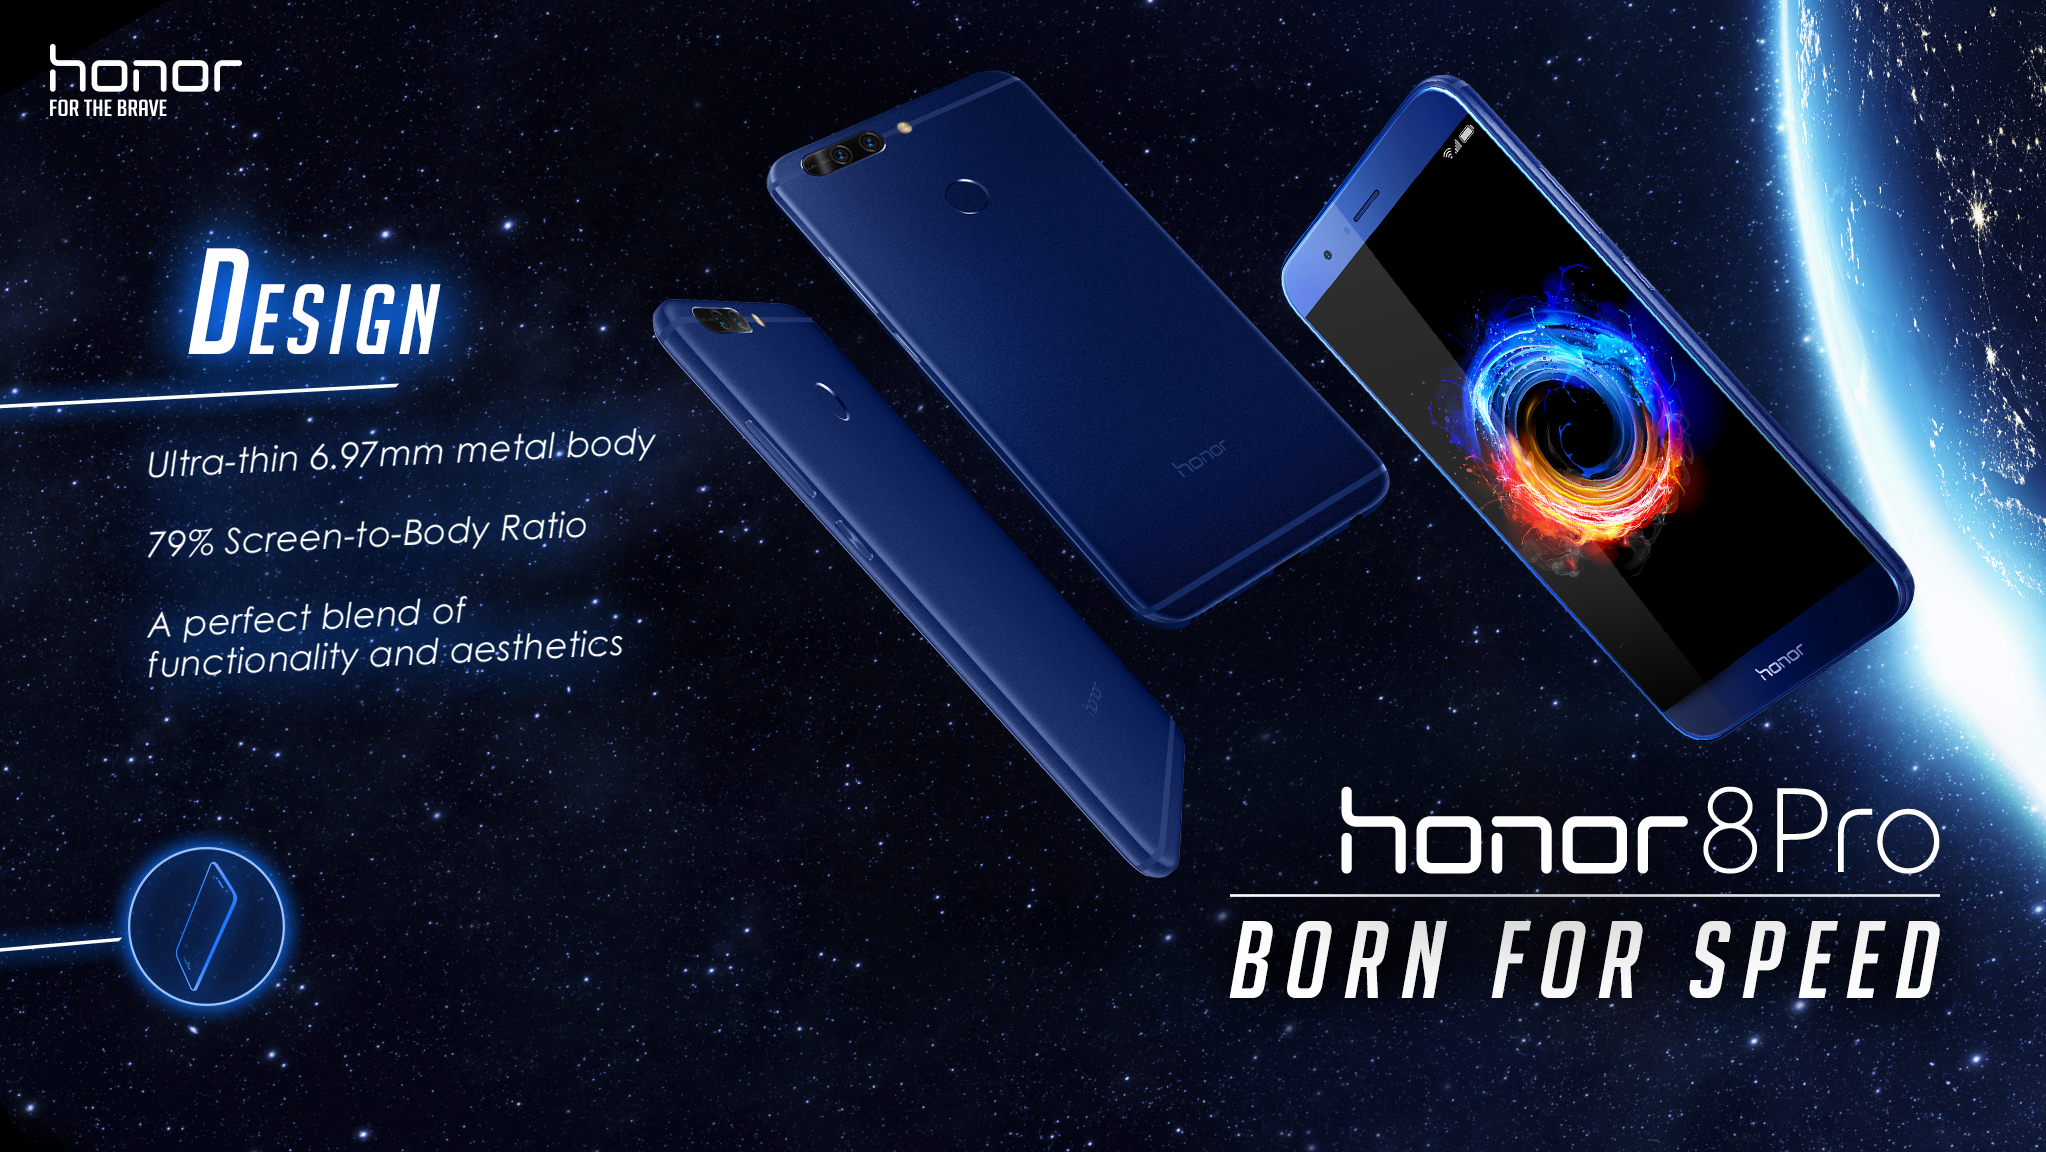 Huawei's new Honor 8 Pro smartphone has 6GB of RAM, ultra-slim